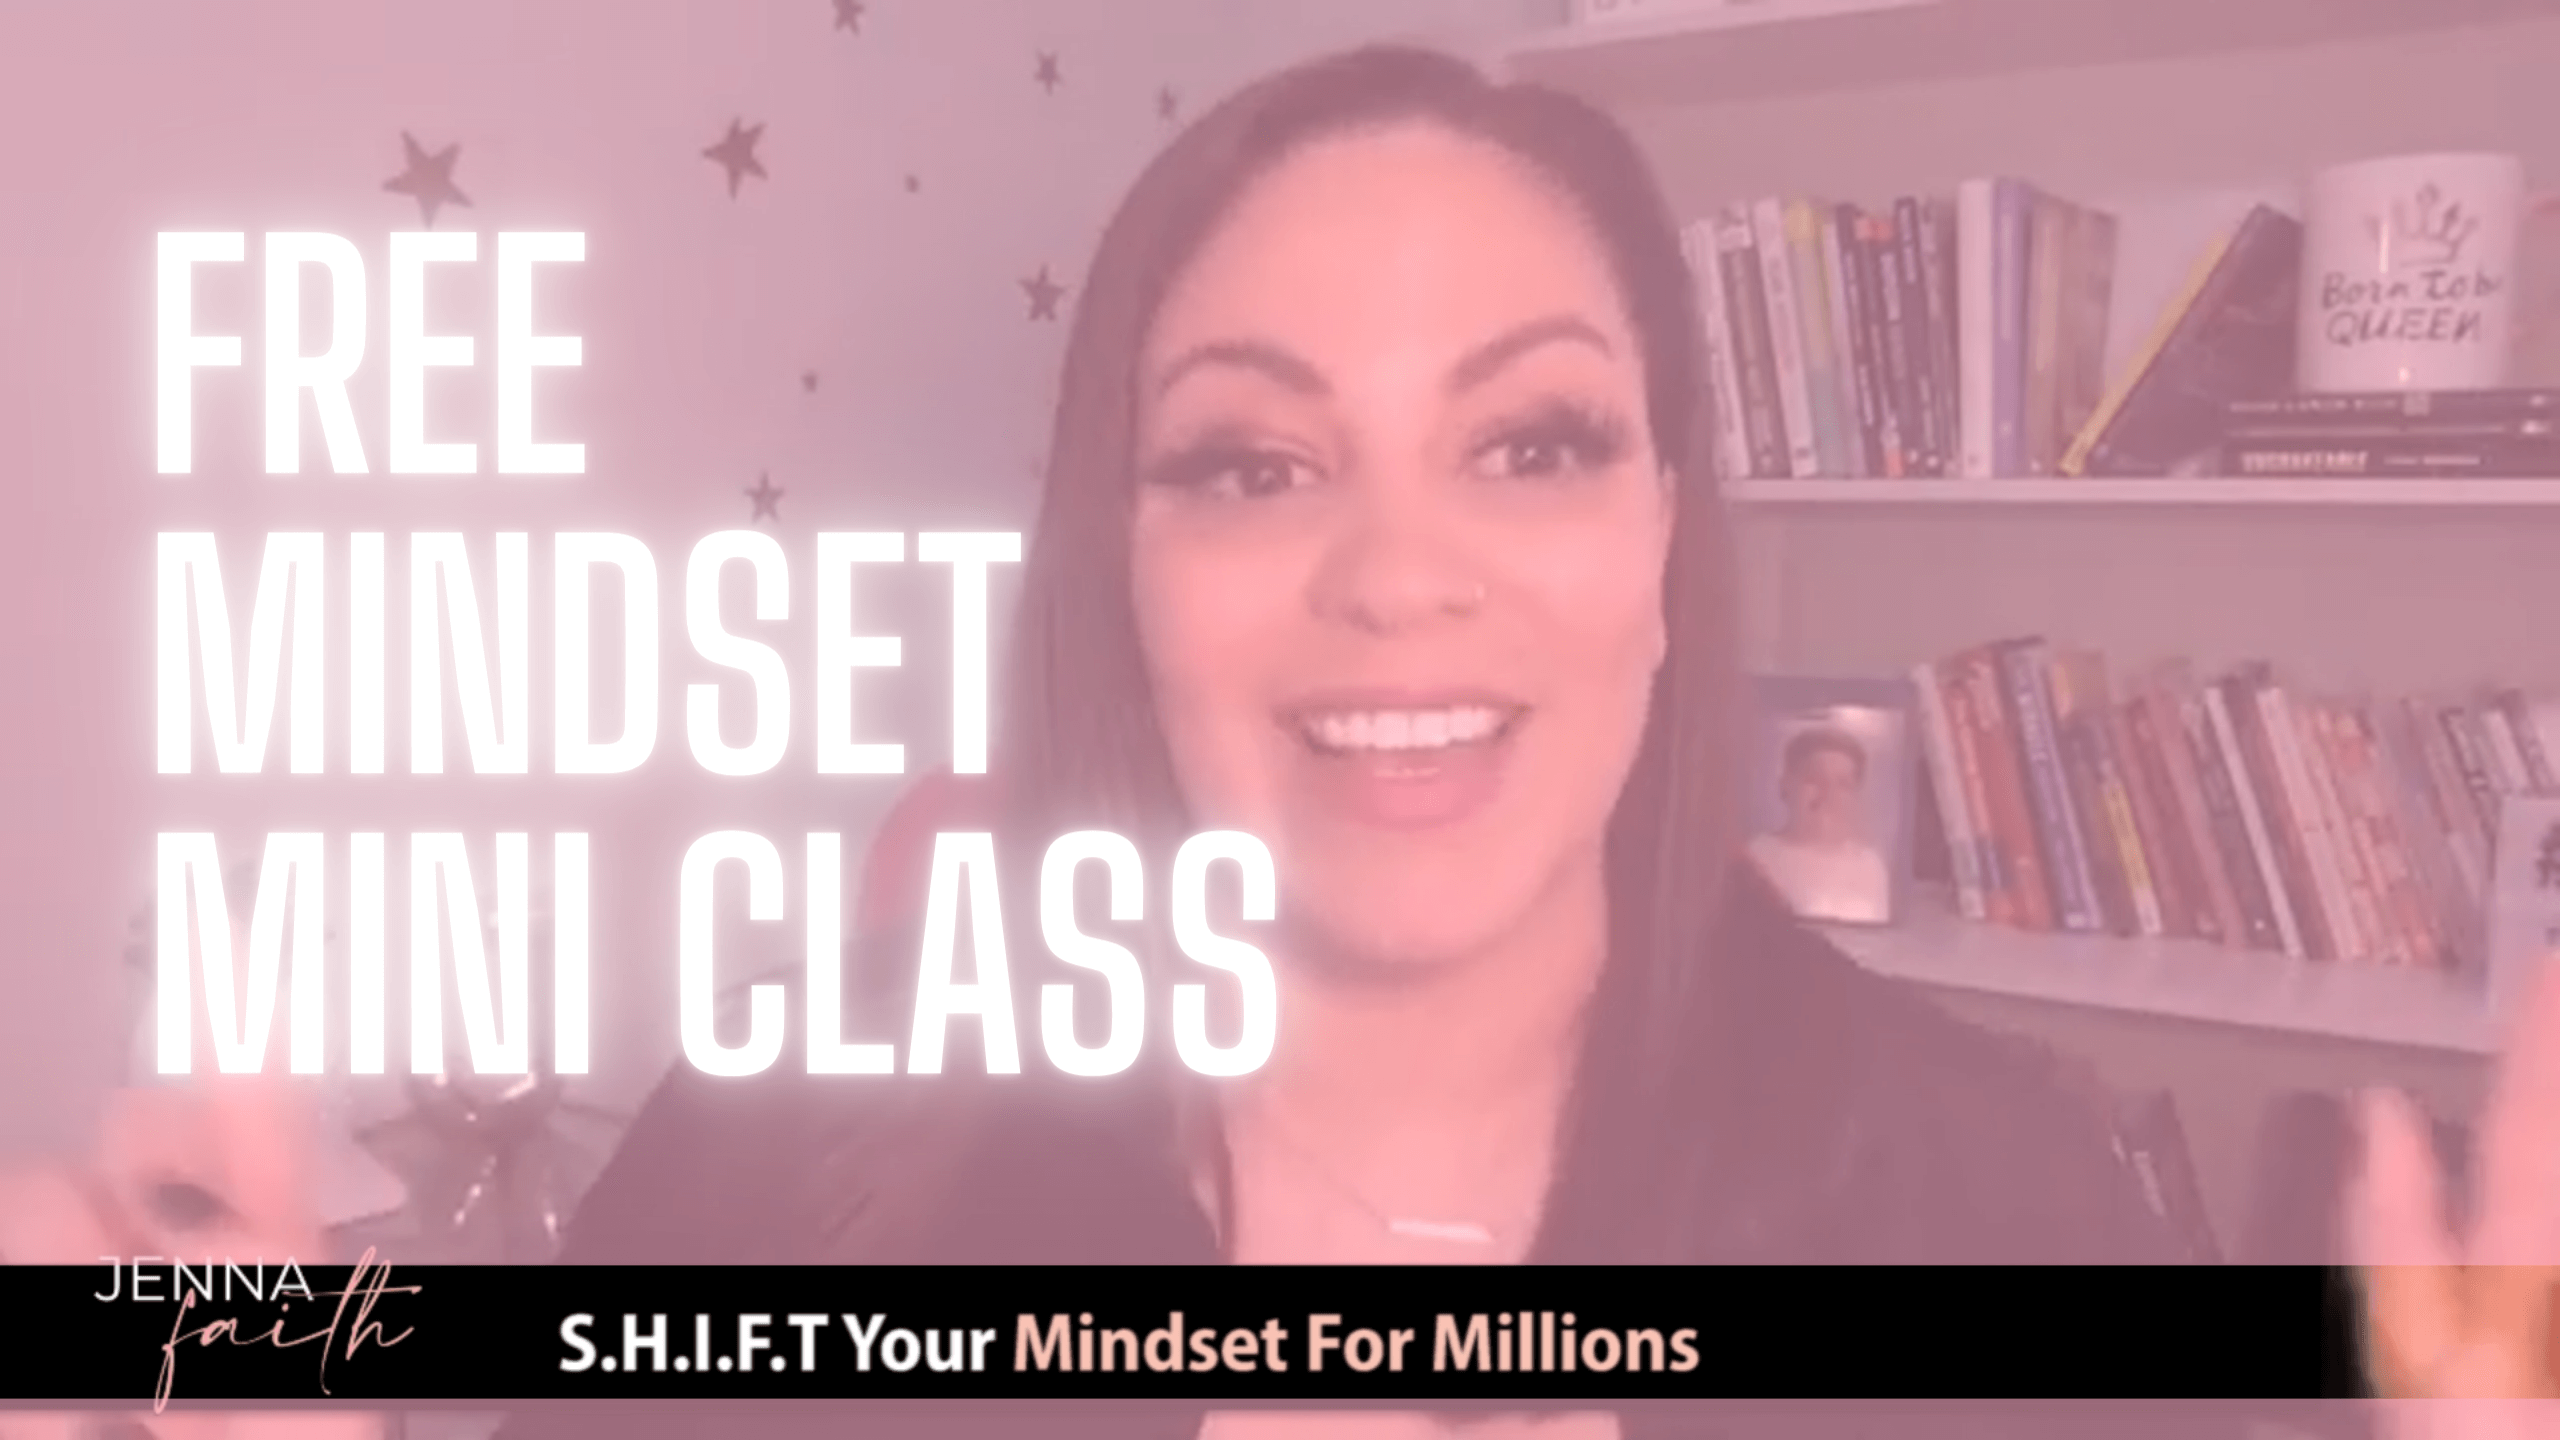 Watch my FREE Mindset Mini Class instantly